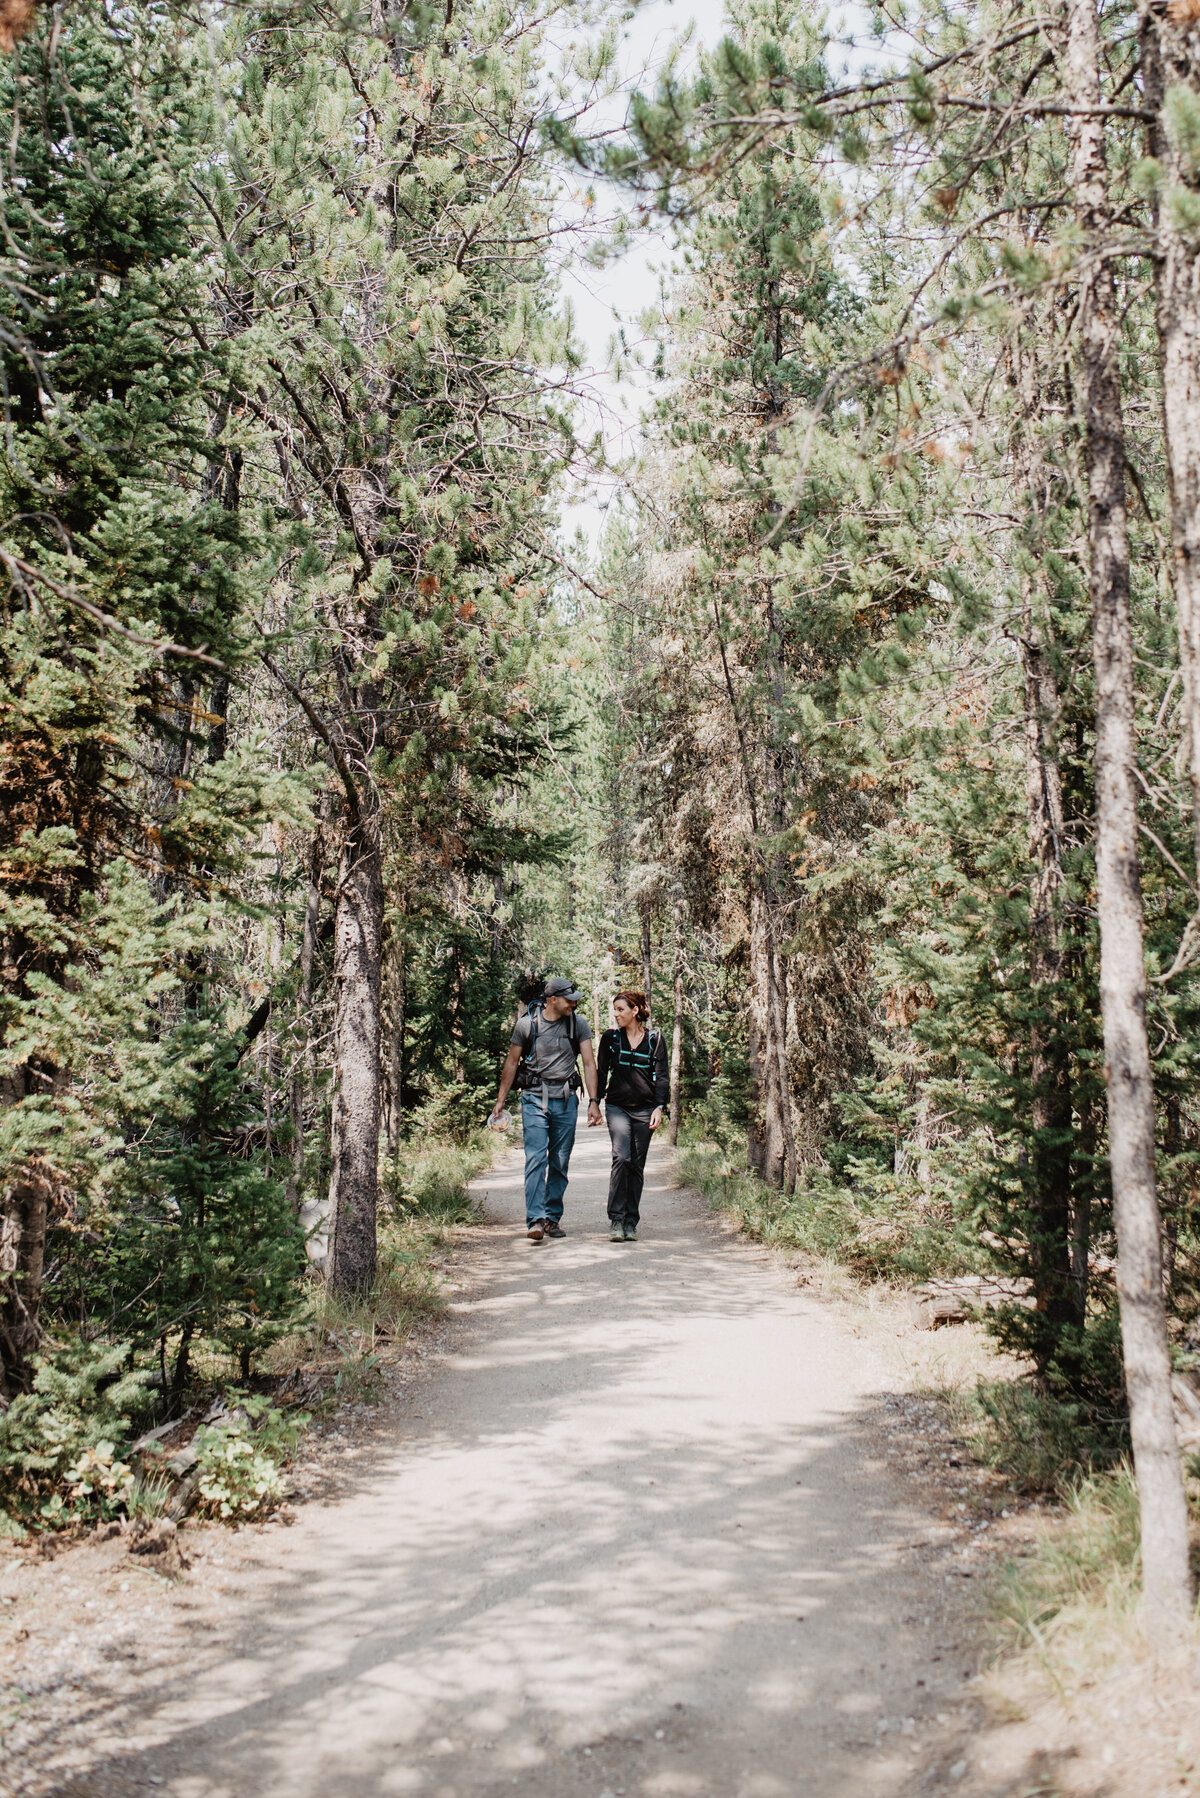 Jackson Hole photographers capture man and woman walking together